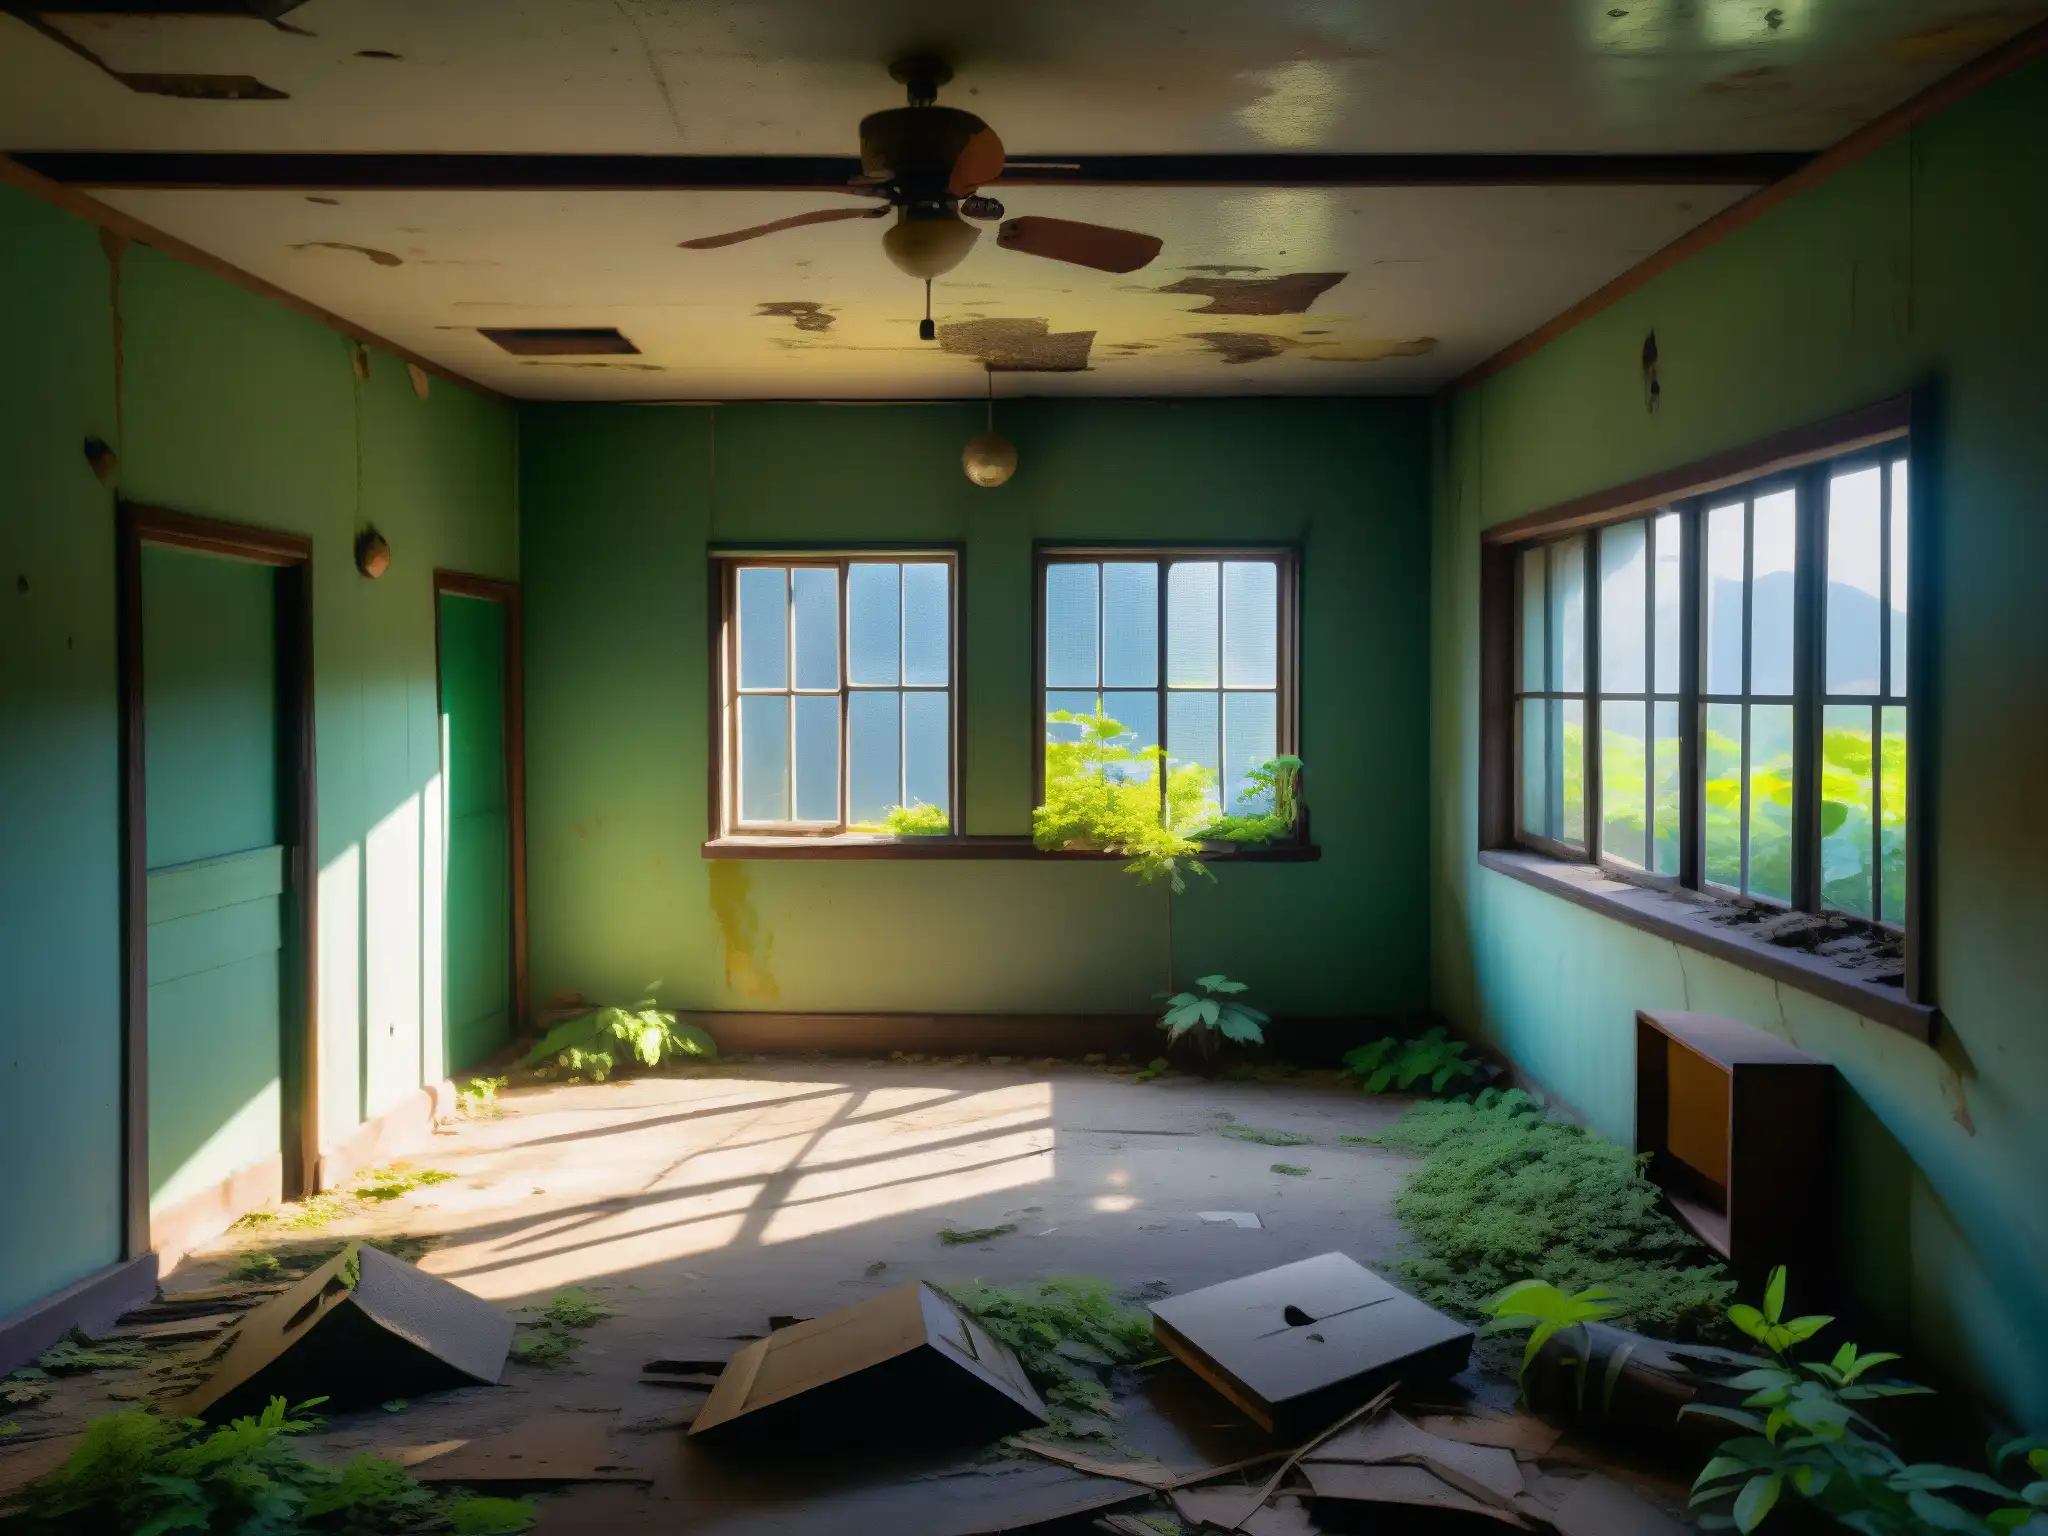 Un segundo piso abandonado en un edificio coreano, con pintura descascarada, ventanas rotas y vegetación invasiva